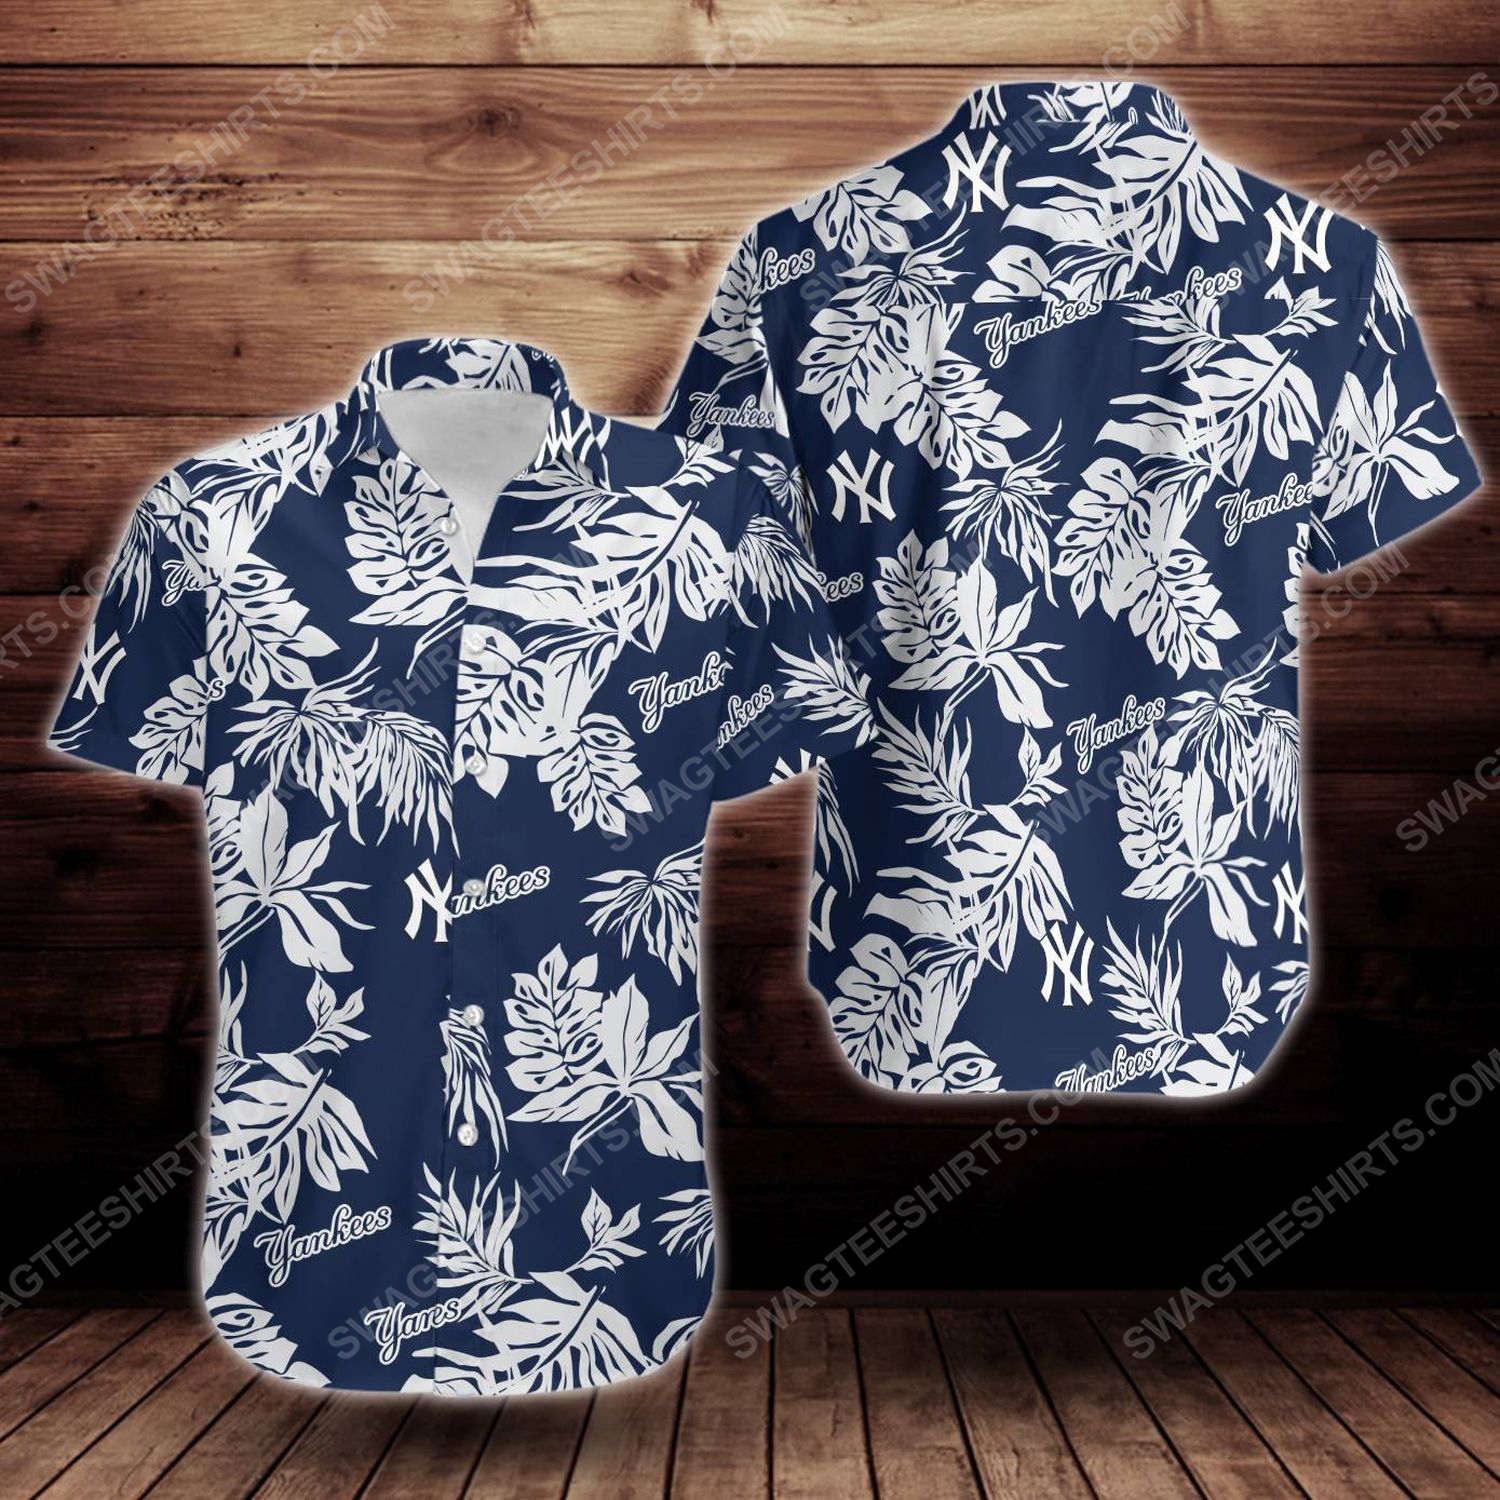 [special edition] Tropical summer new york yankees short sleeve hawaiian shirt – maria